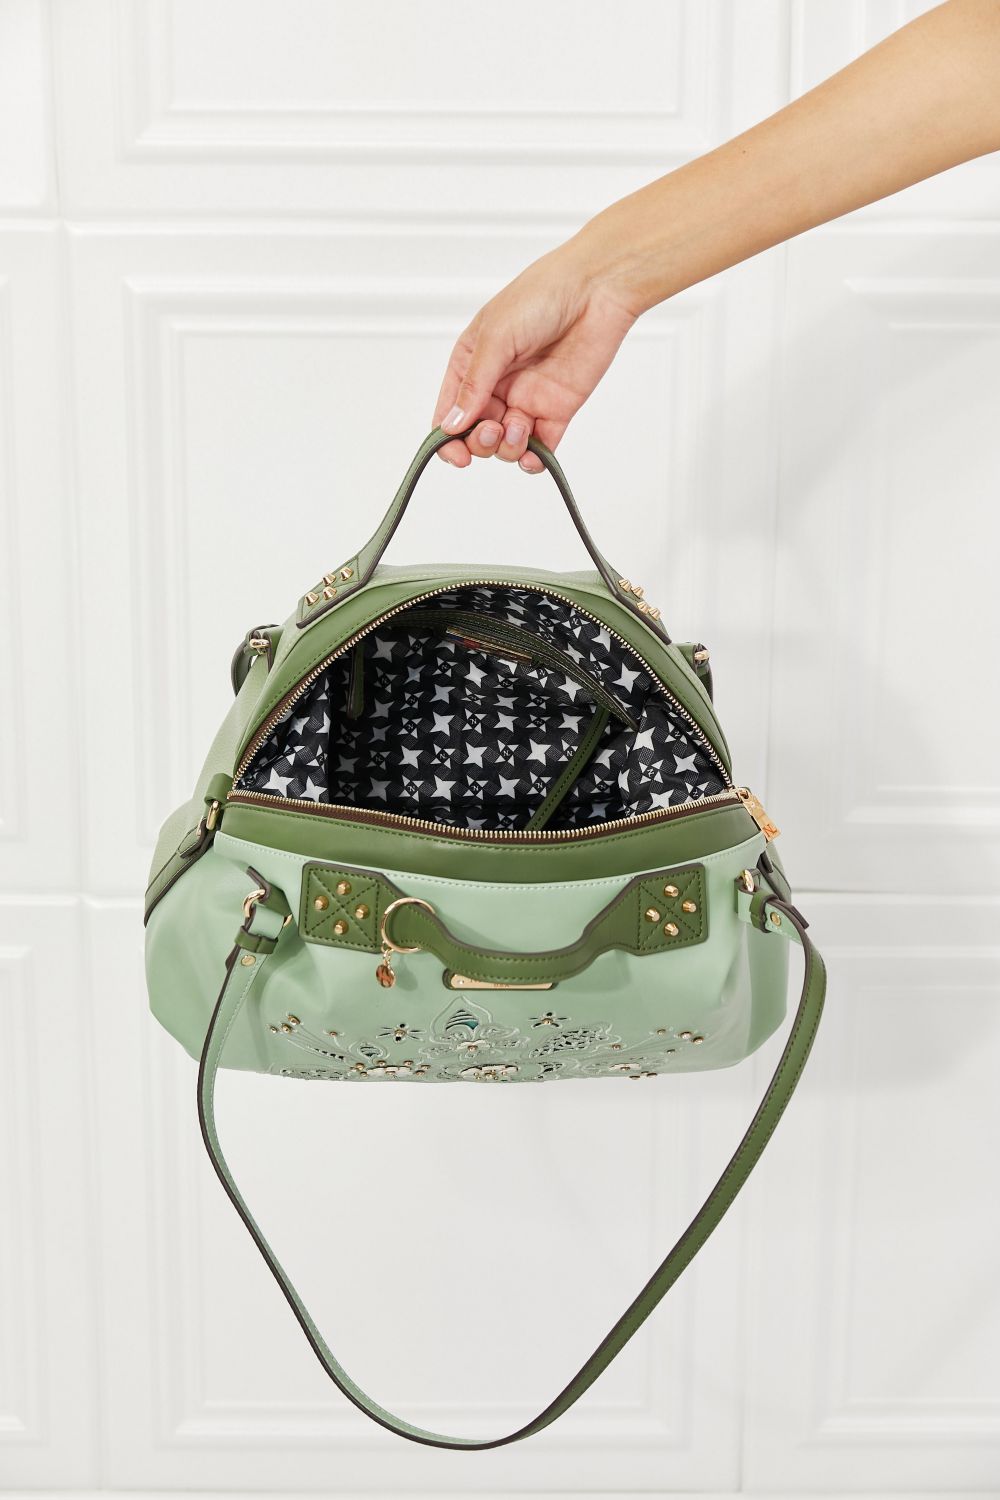 Handbags: Nicole Lee USA Evolve Handbag